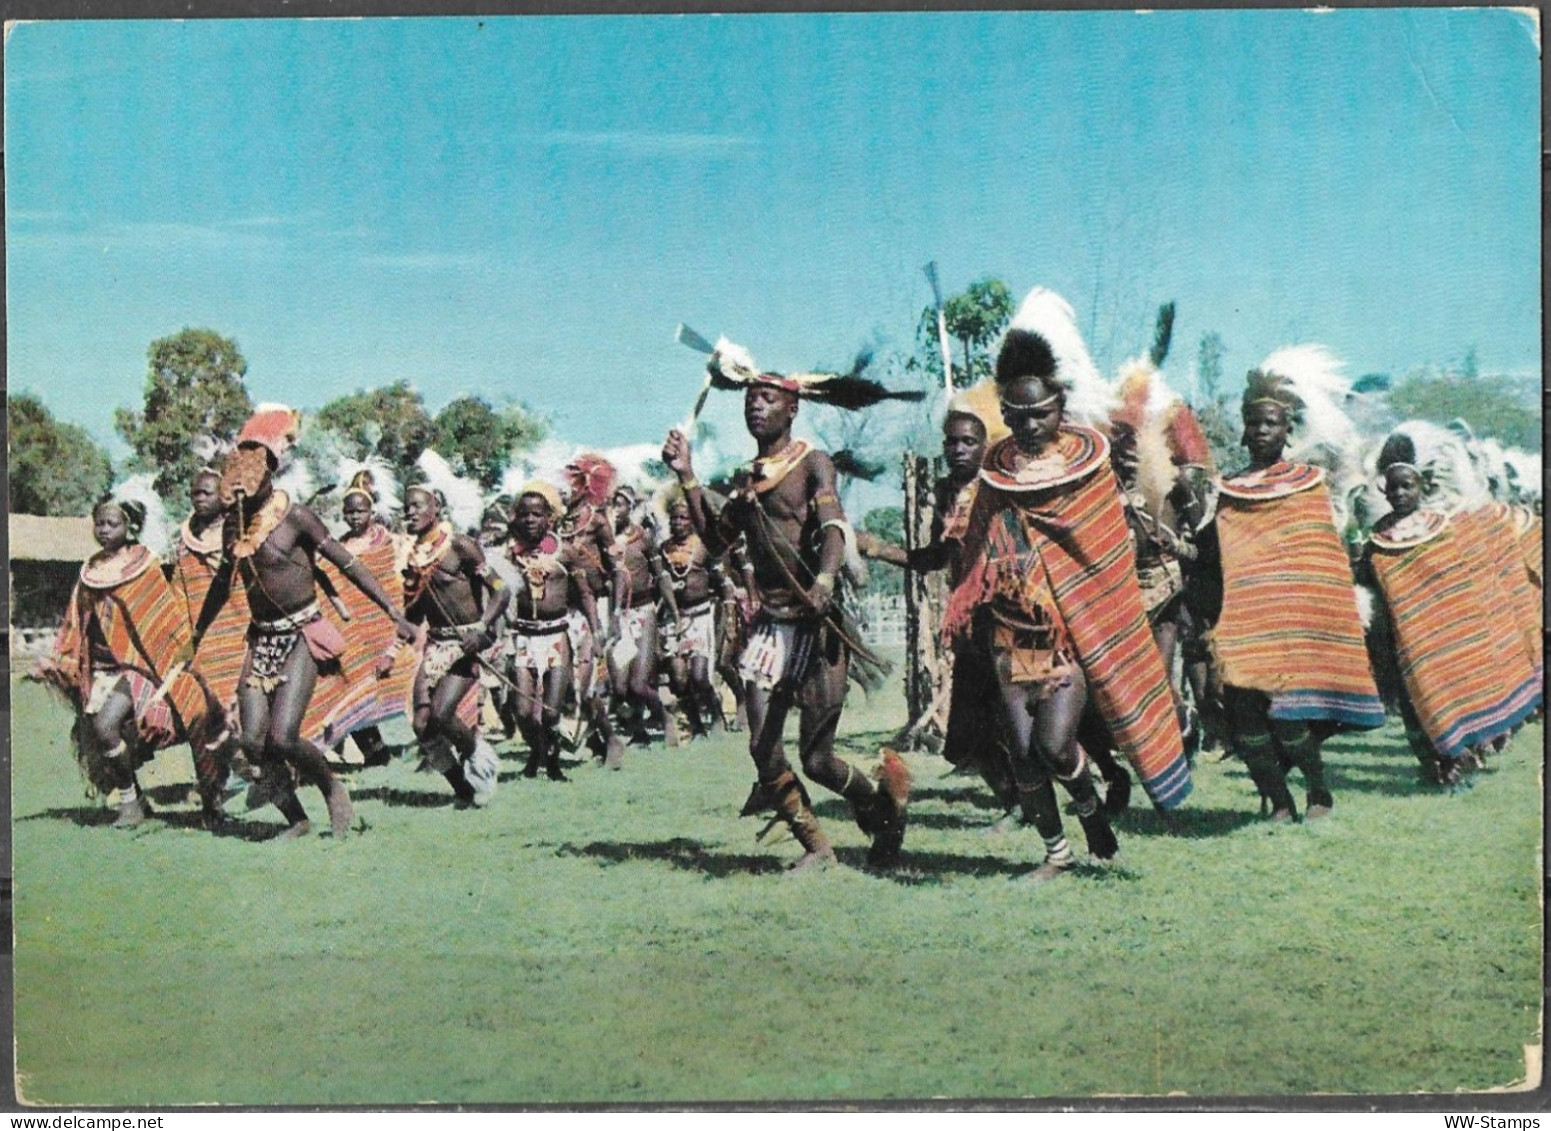 Postcard Circa 1960 Kenya East African Dancers [ILT2072] - Kenya